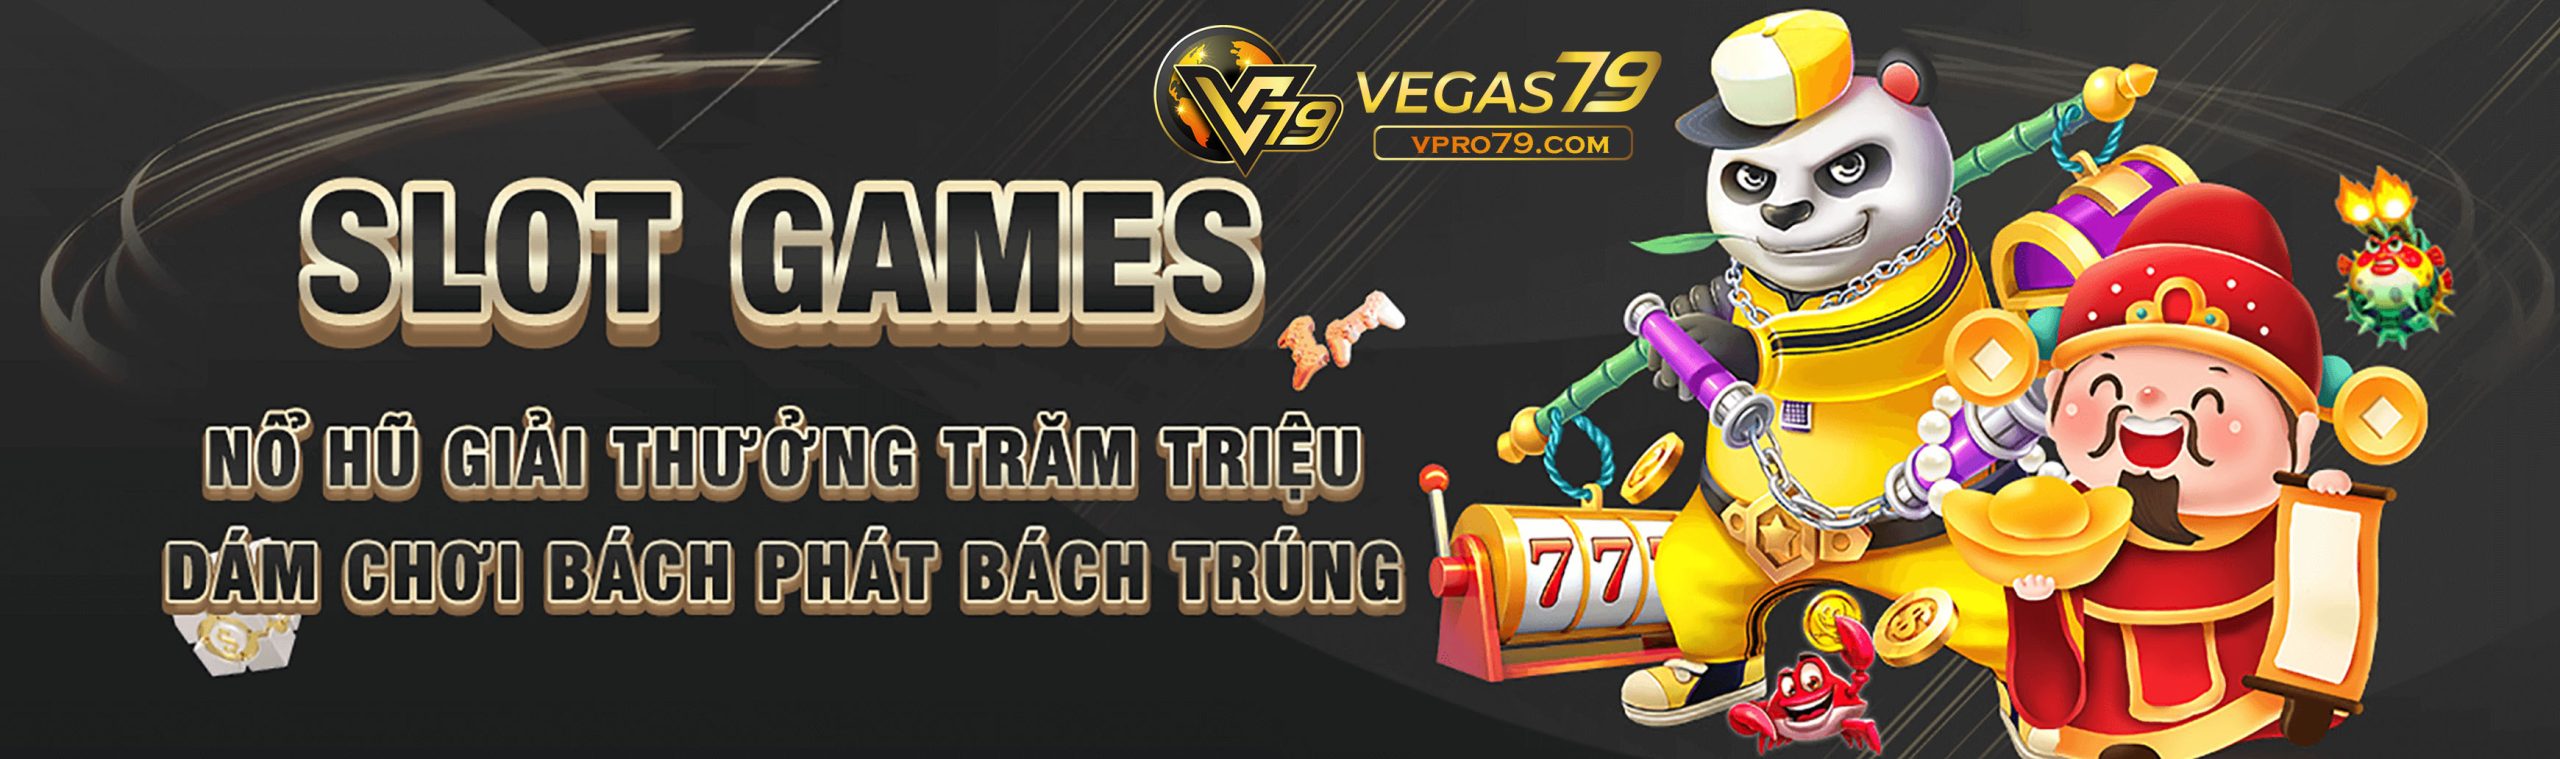 slot games vegas79